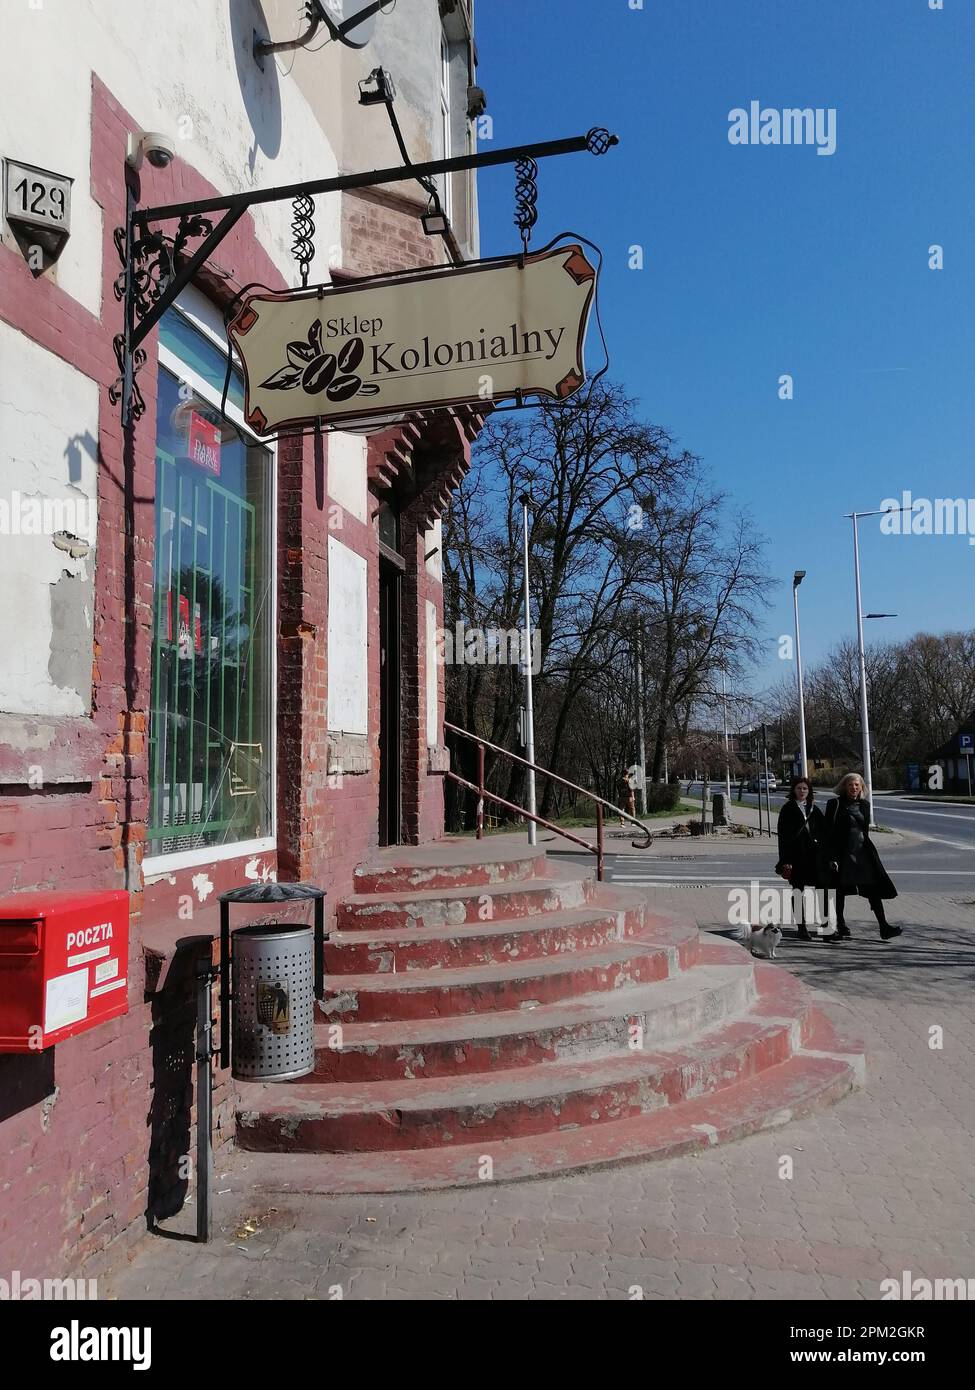 A vertical shot of old Sklad Kolonialny restaurant in Swiecie, Poland Stock Photo